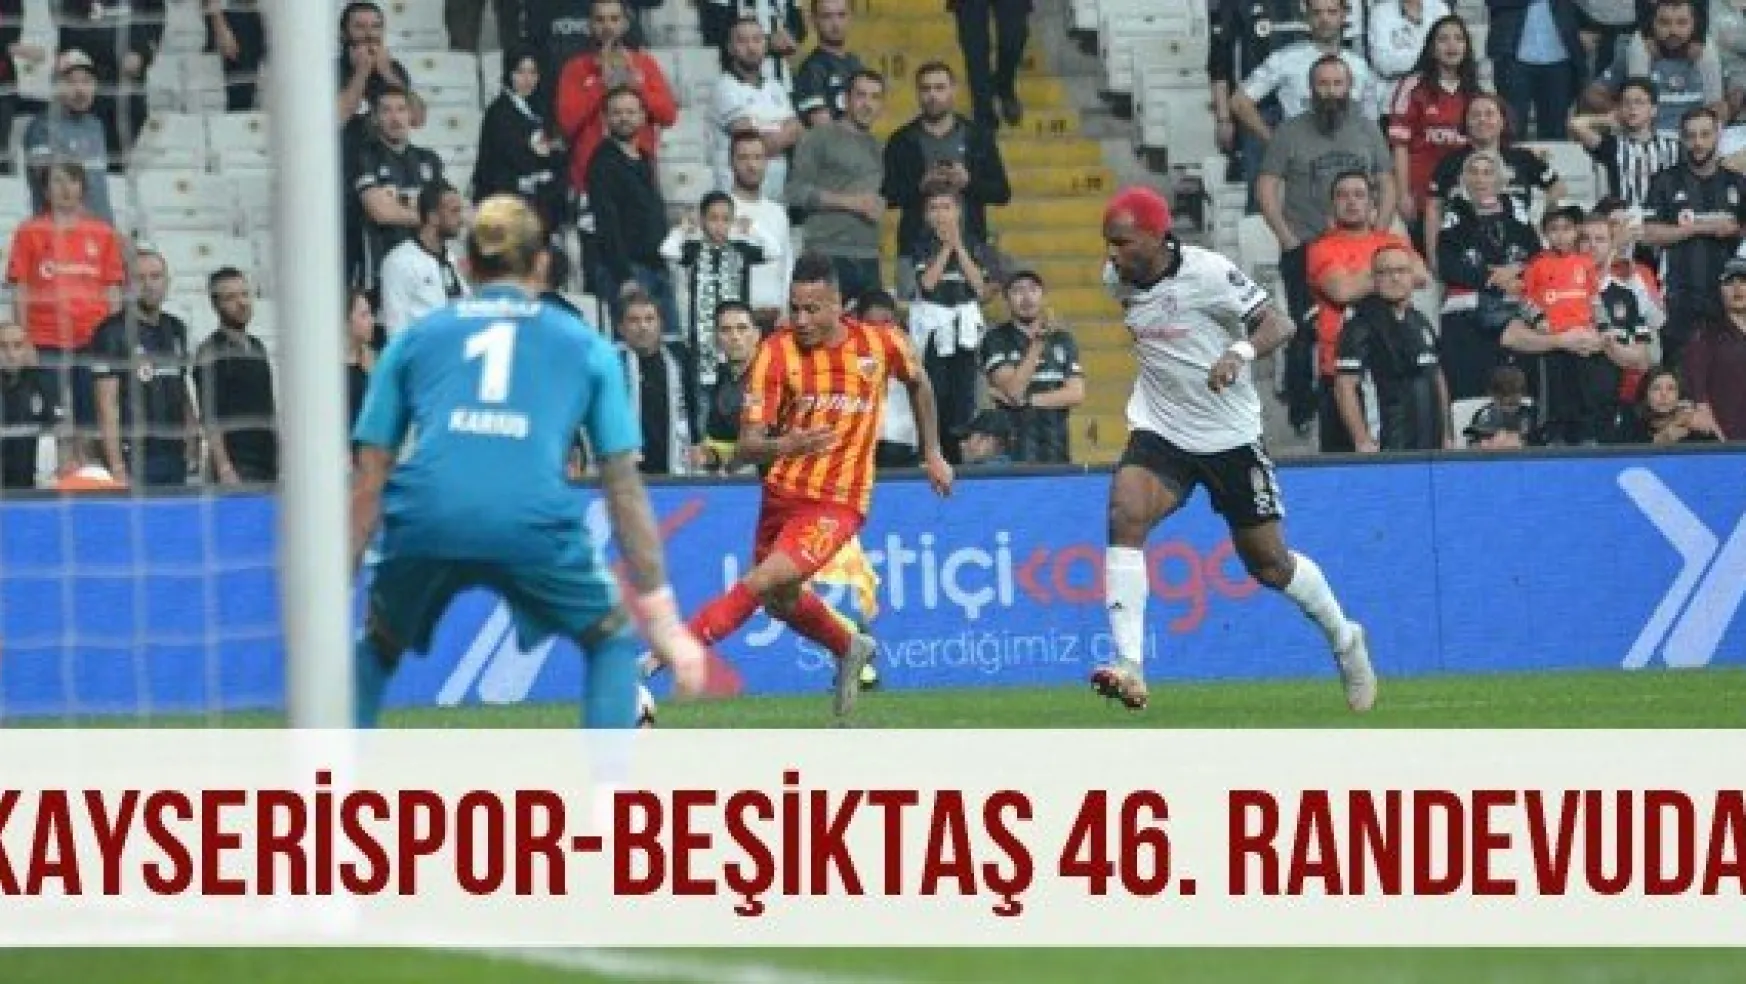 Kayserispor-Beşiktaş 46. Randevuda